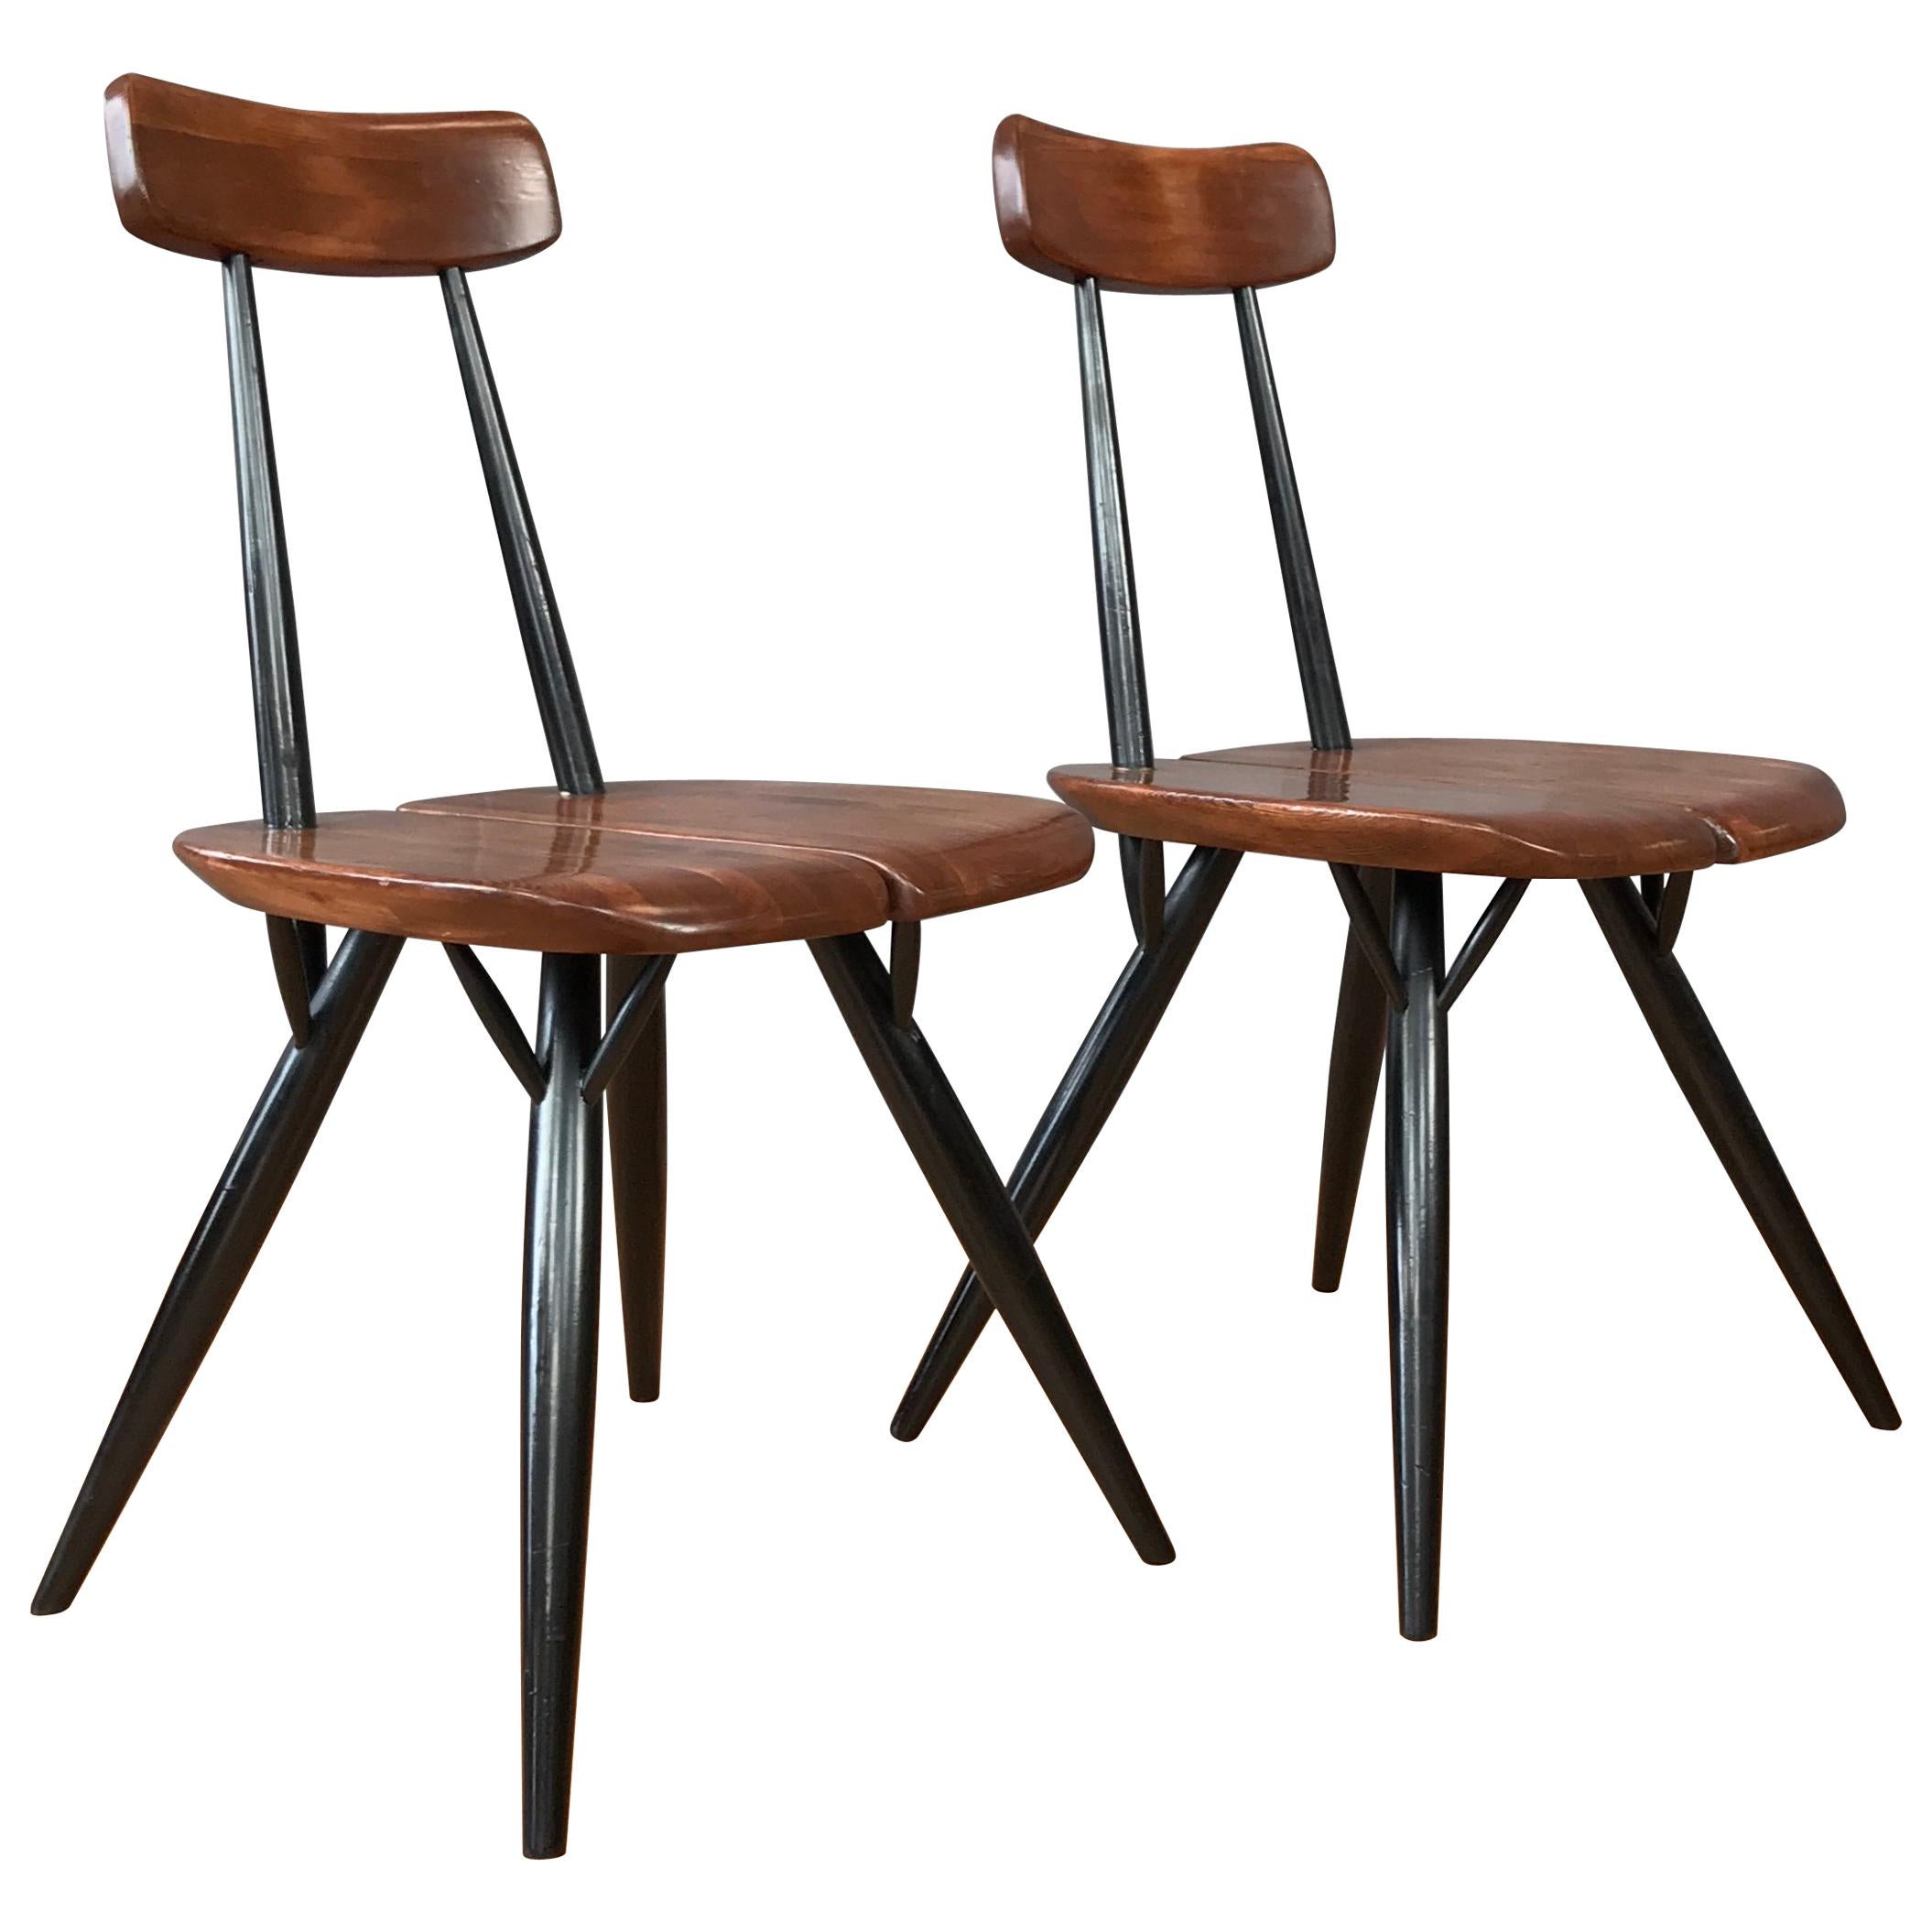 Pair of "Pirkka" Chairs by Ilmari Tapiovaara